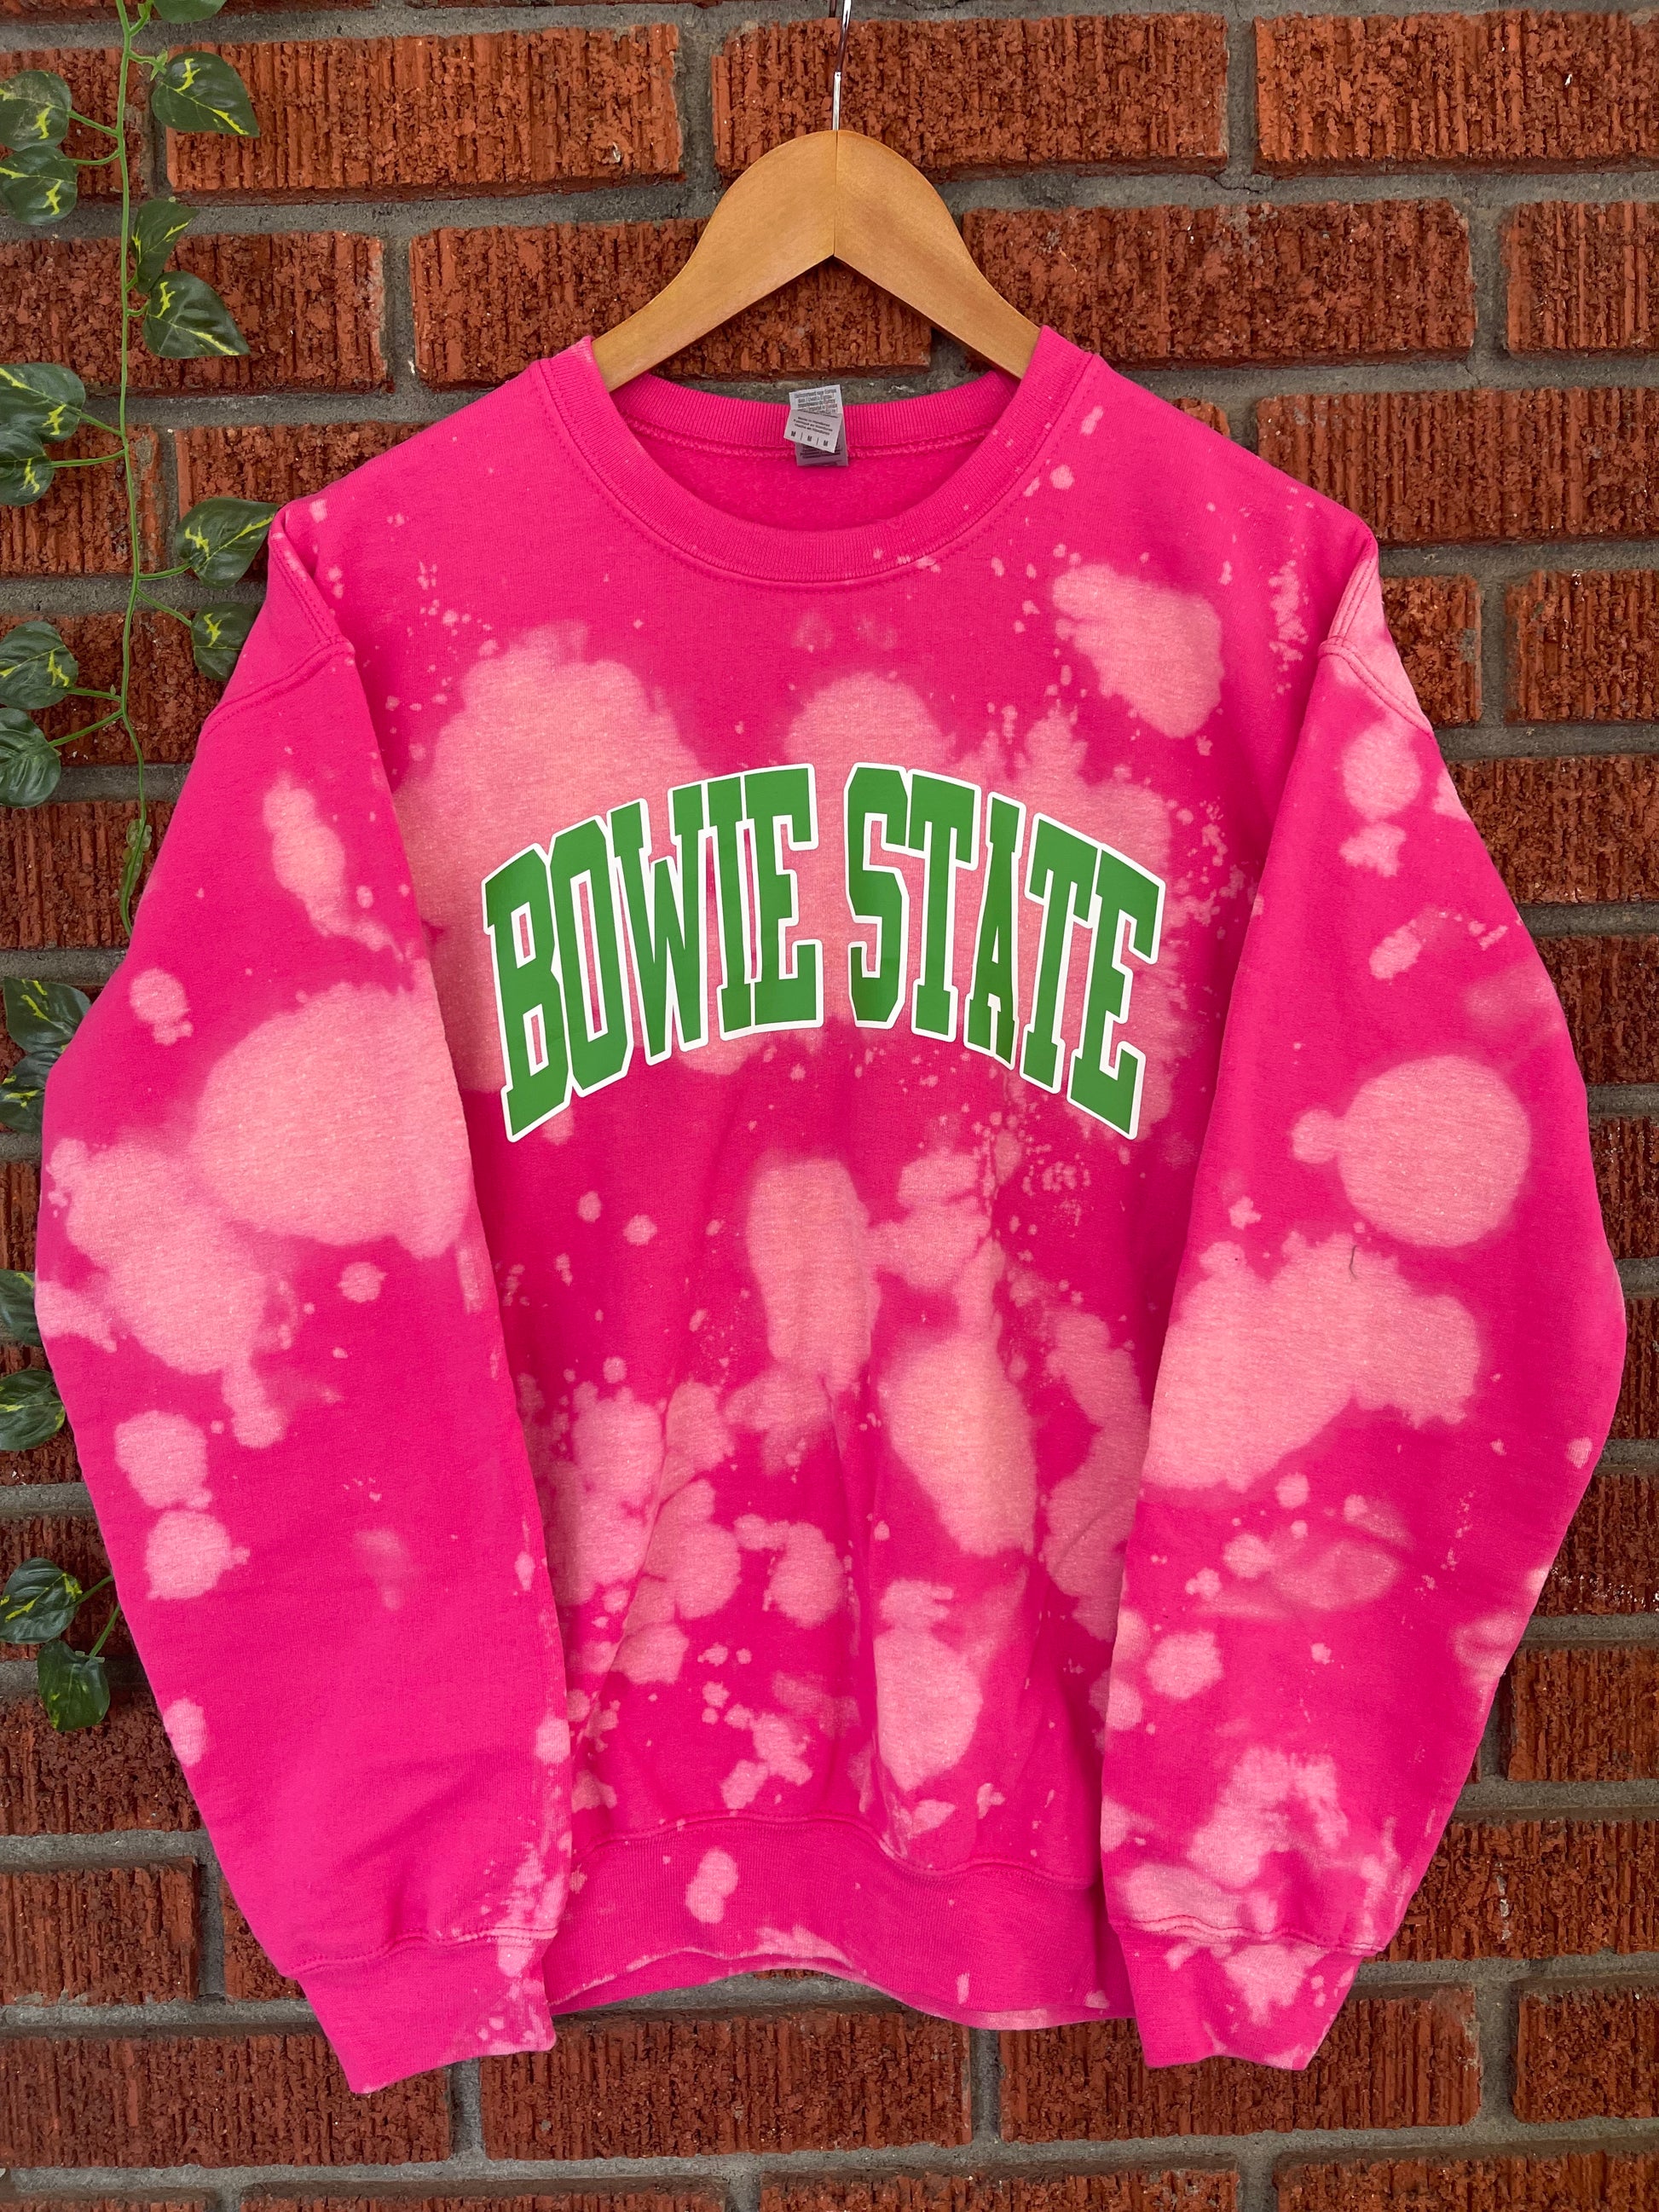 Bowie State pink and green AKA Alpha Kappa Alpha Sweatshirt hand bleached handmade